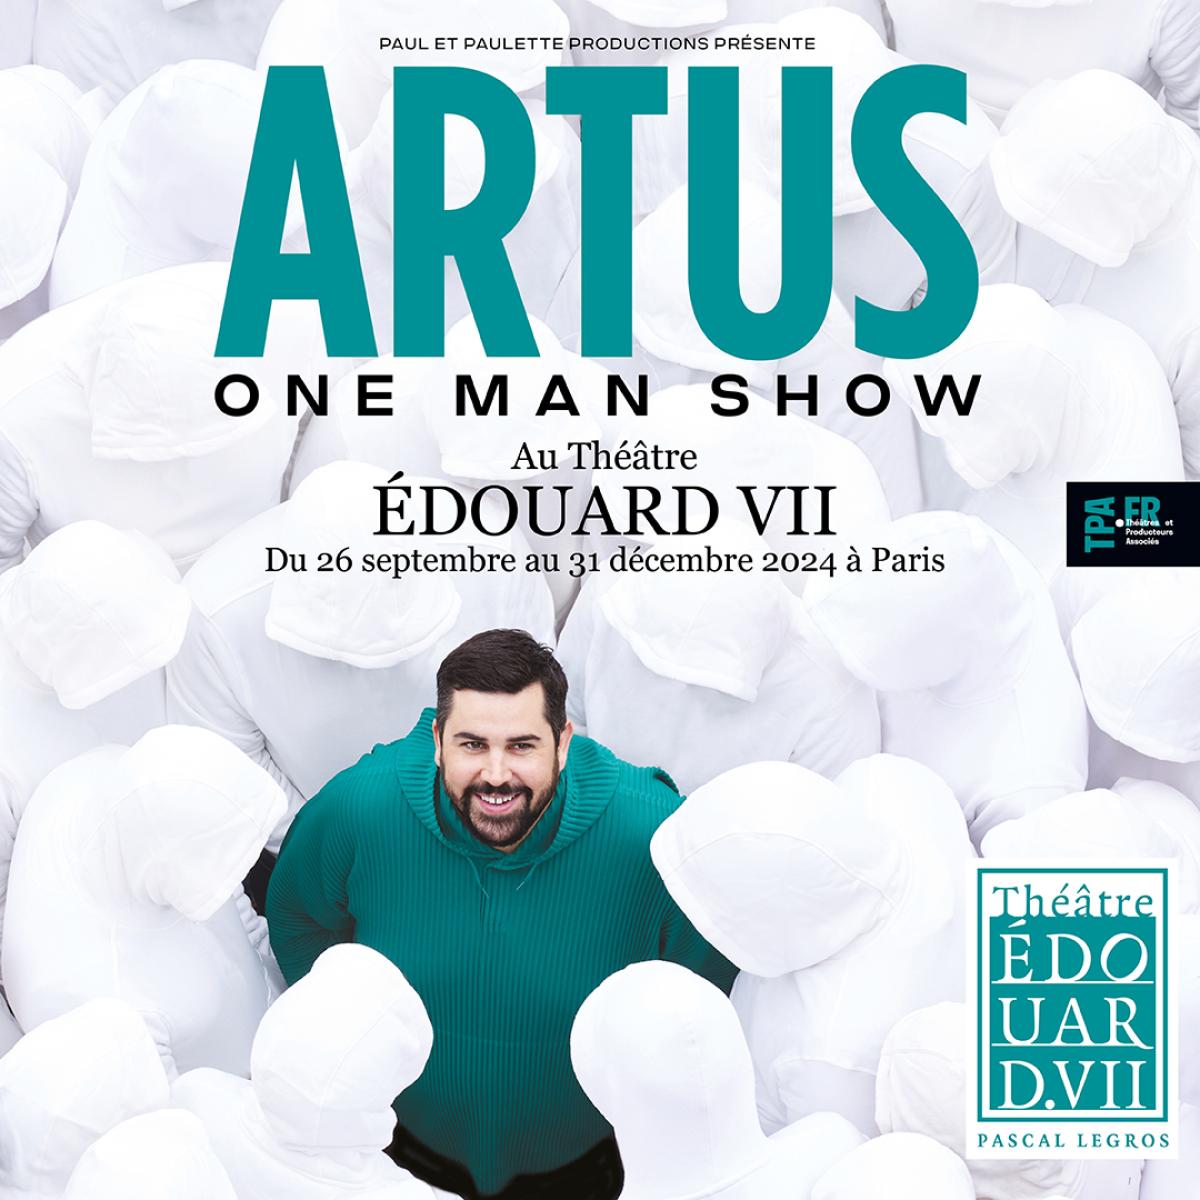 Artus - One Man Show at Theatre Edouard VII Tickets